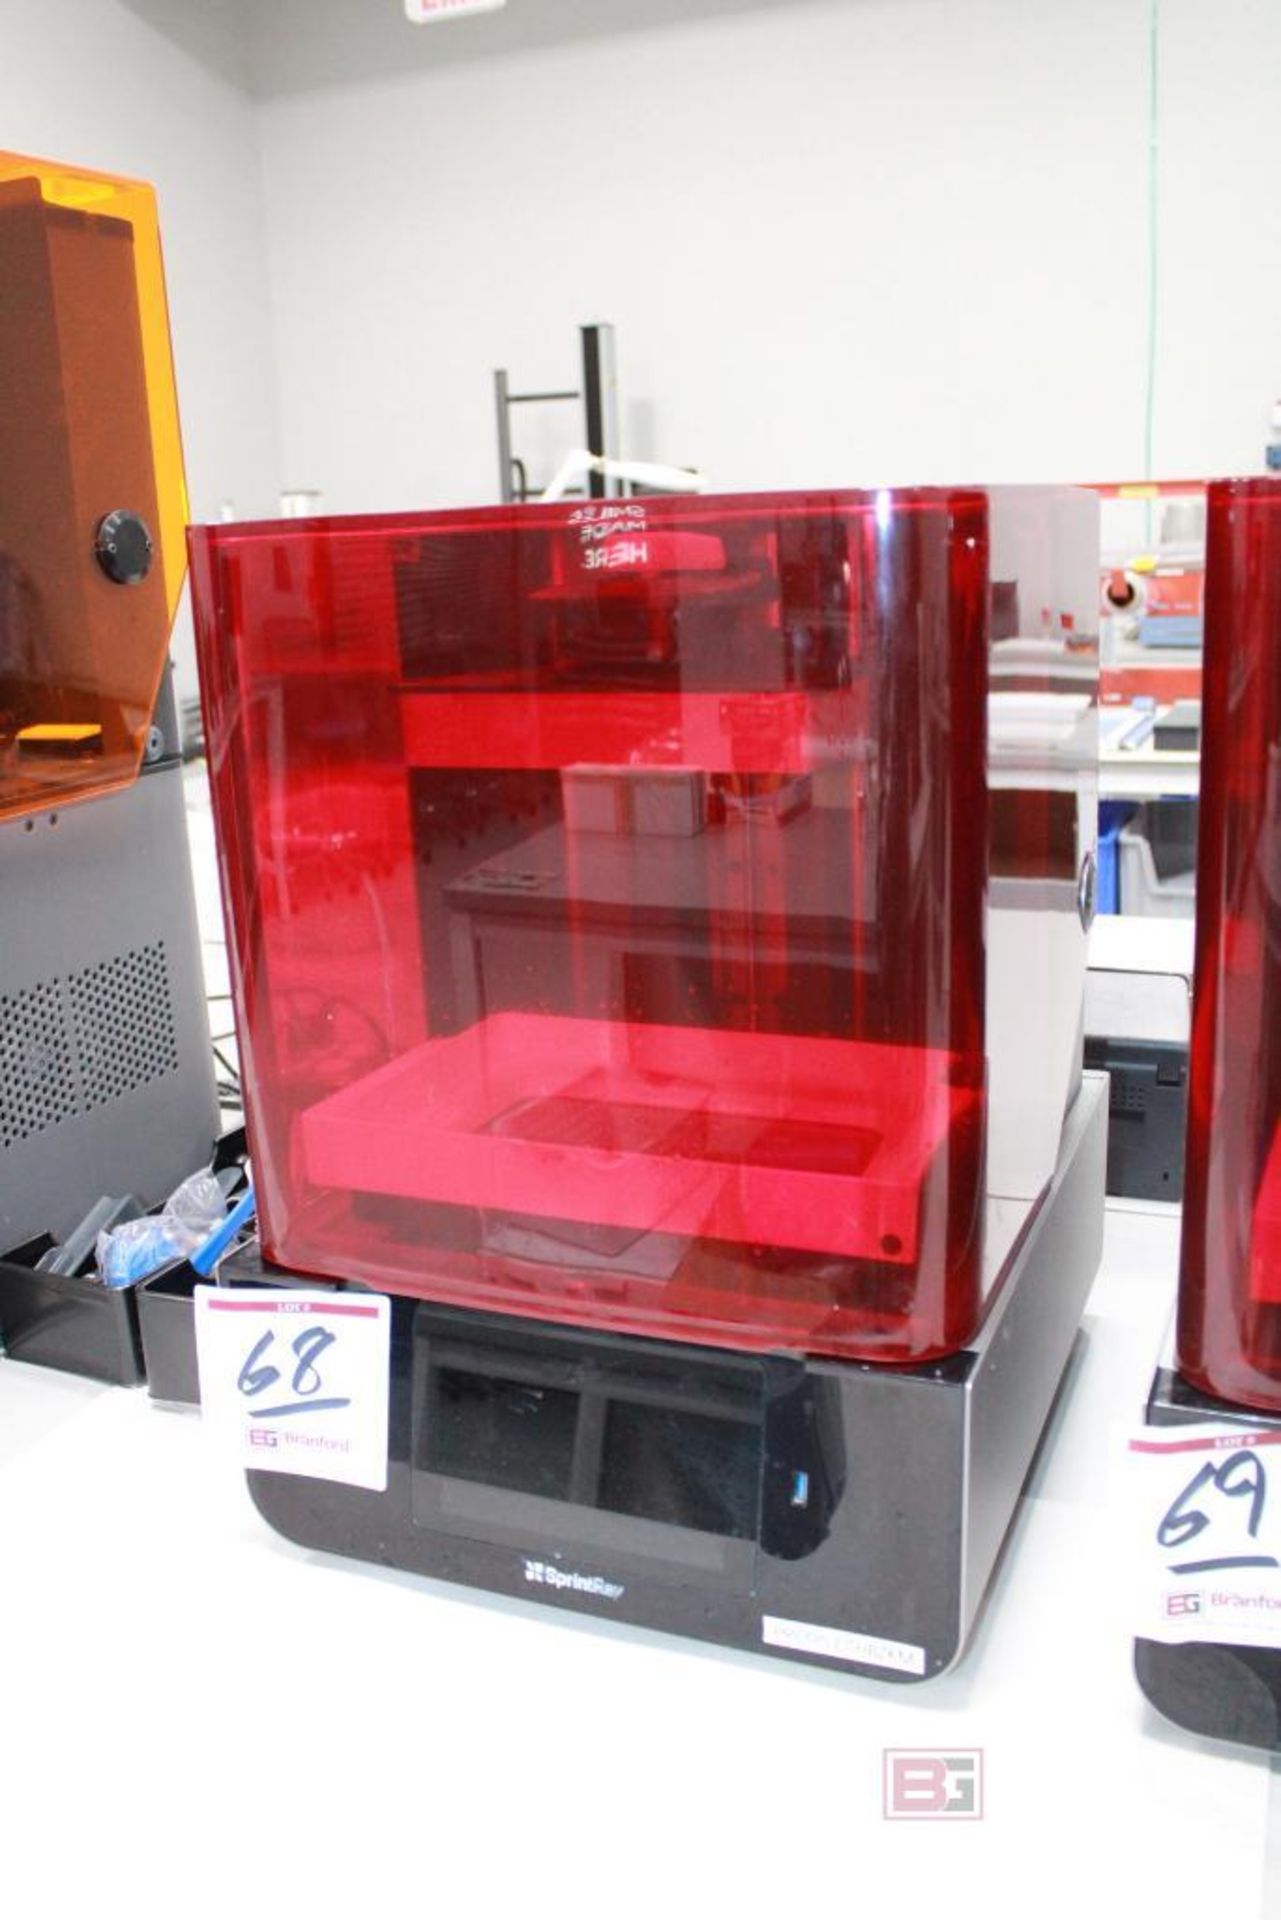 SprintRay Pro 3D Printer Model SRP1902A